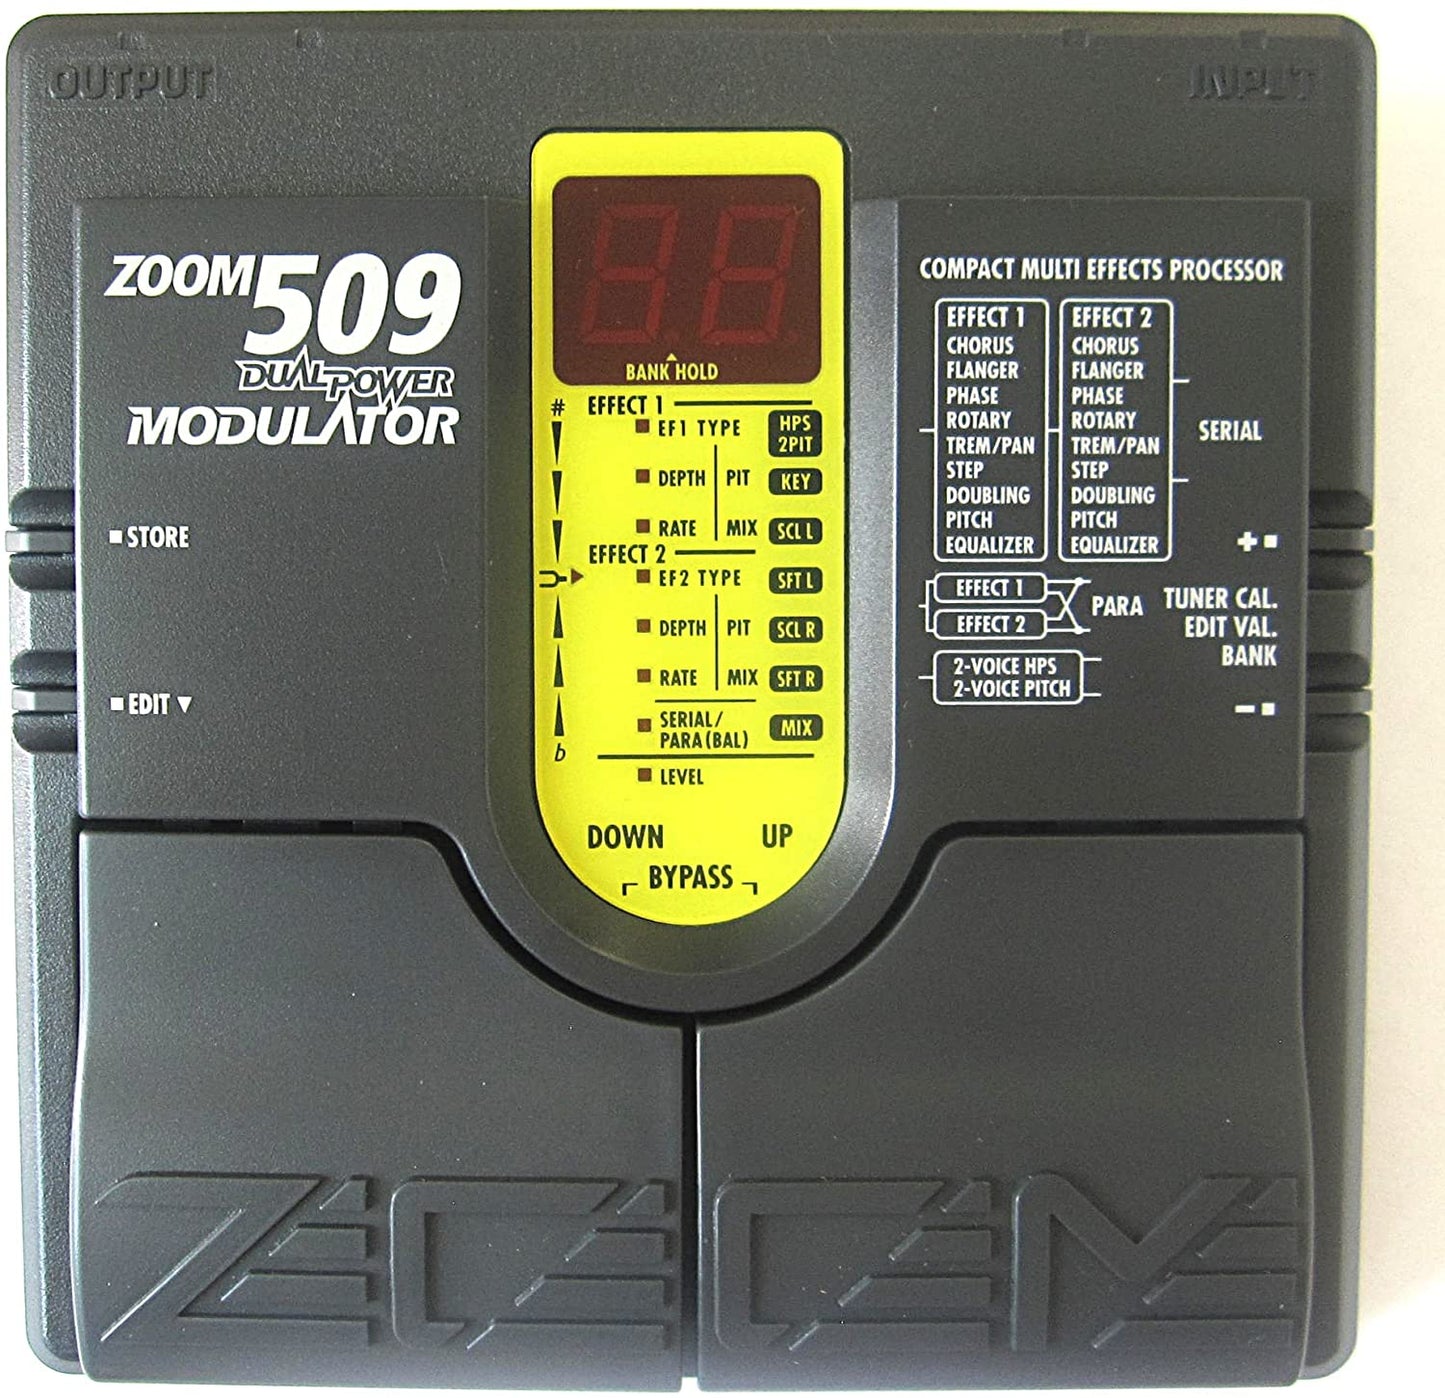 Zoom 509 dual power